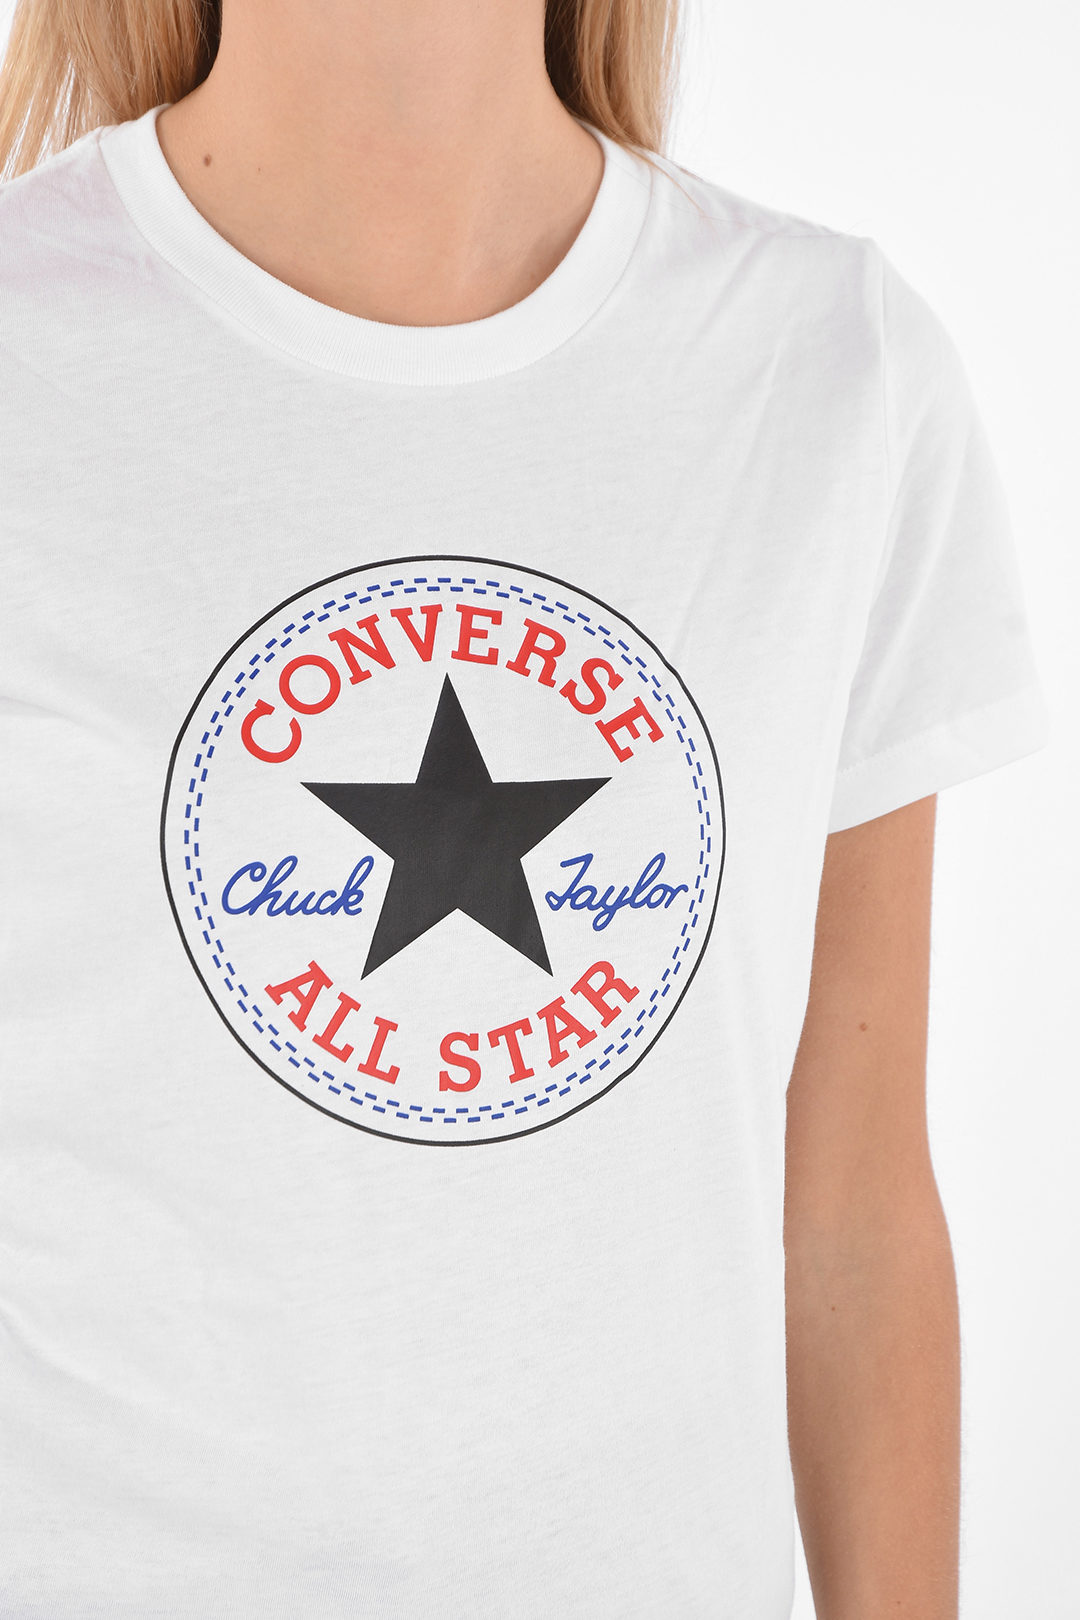 Tactile sense Mentally concern Converse ALL STAR Printed T-shirt women - Glamood Outlet